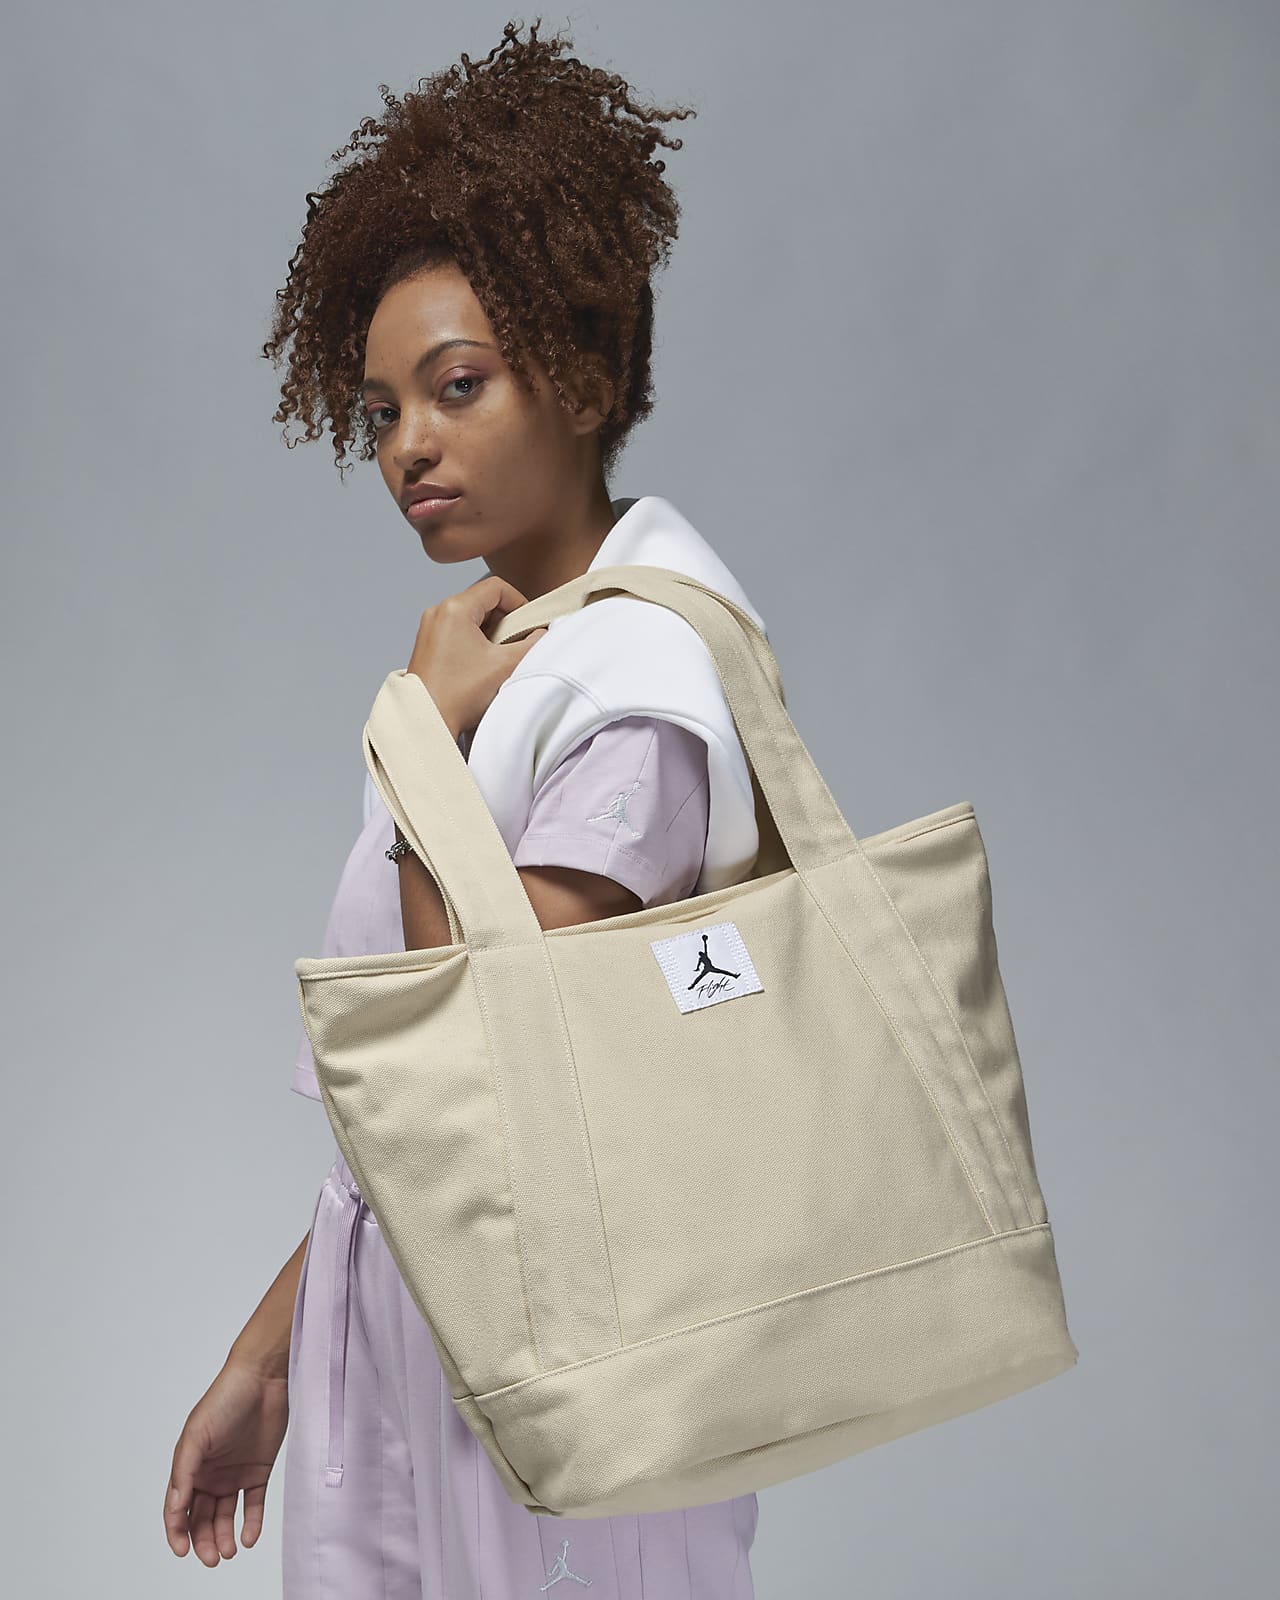 Nike Swoosh Canvas Tote Bag in Natural